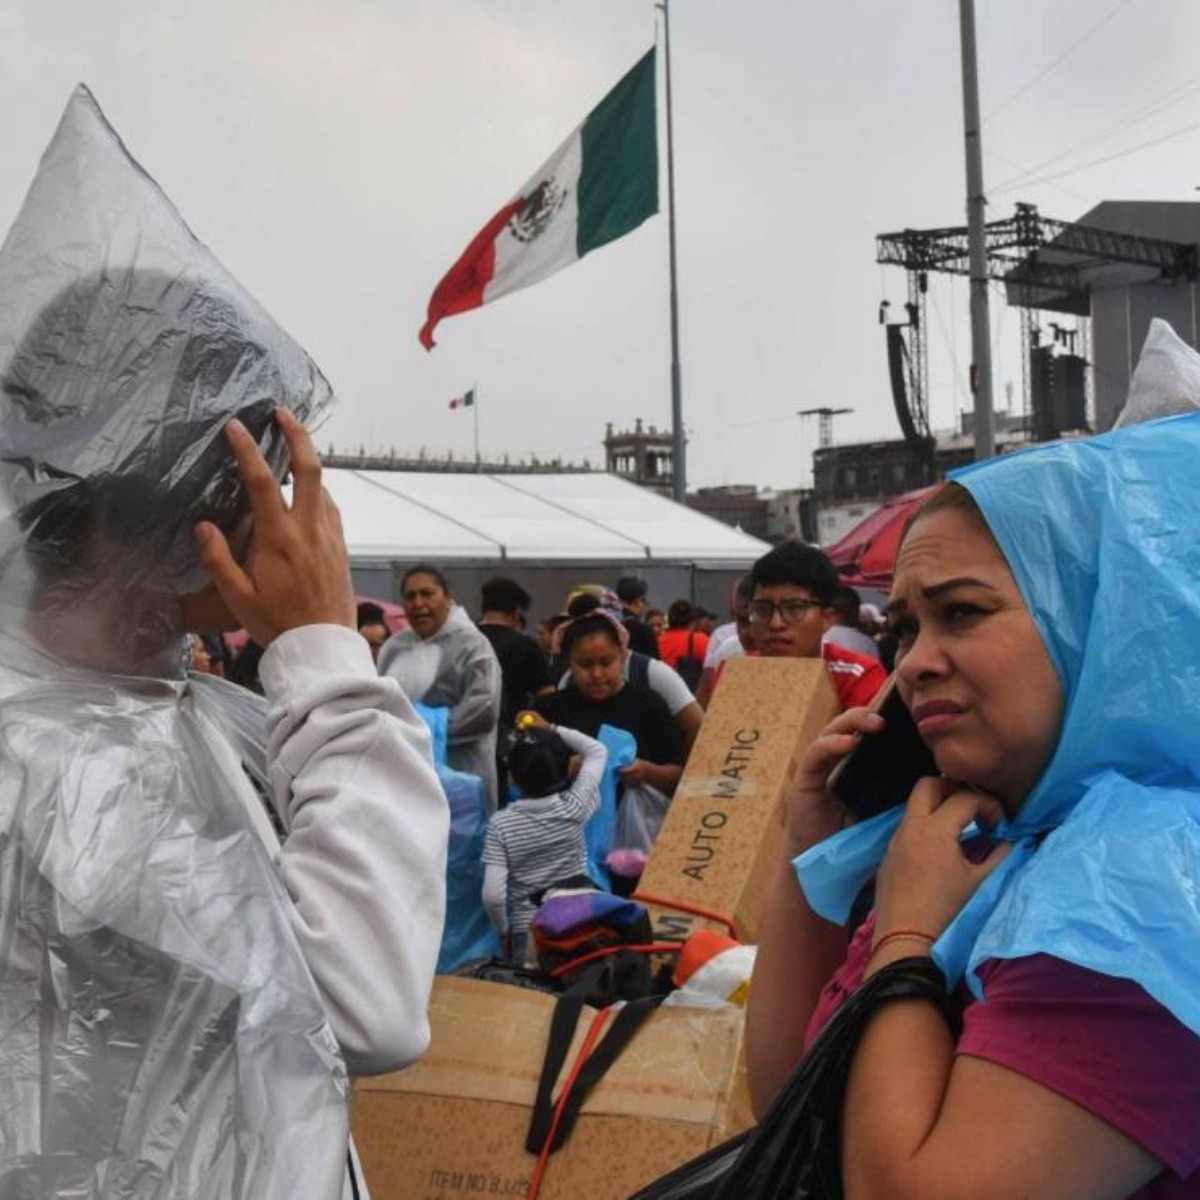 ¡aguas! habrá lluvias en 16 estados de méxico hoy con posible caída de granizo: conagua